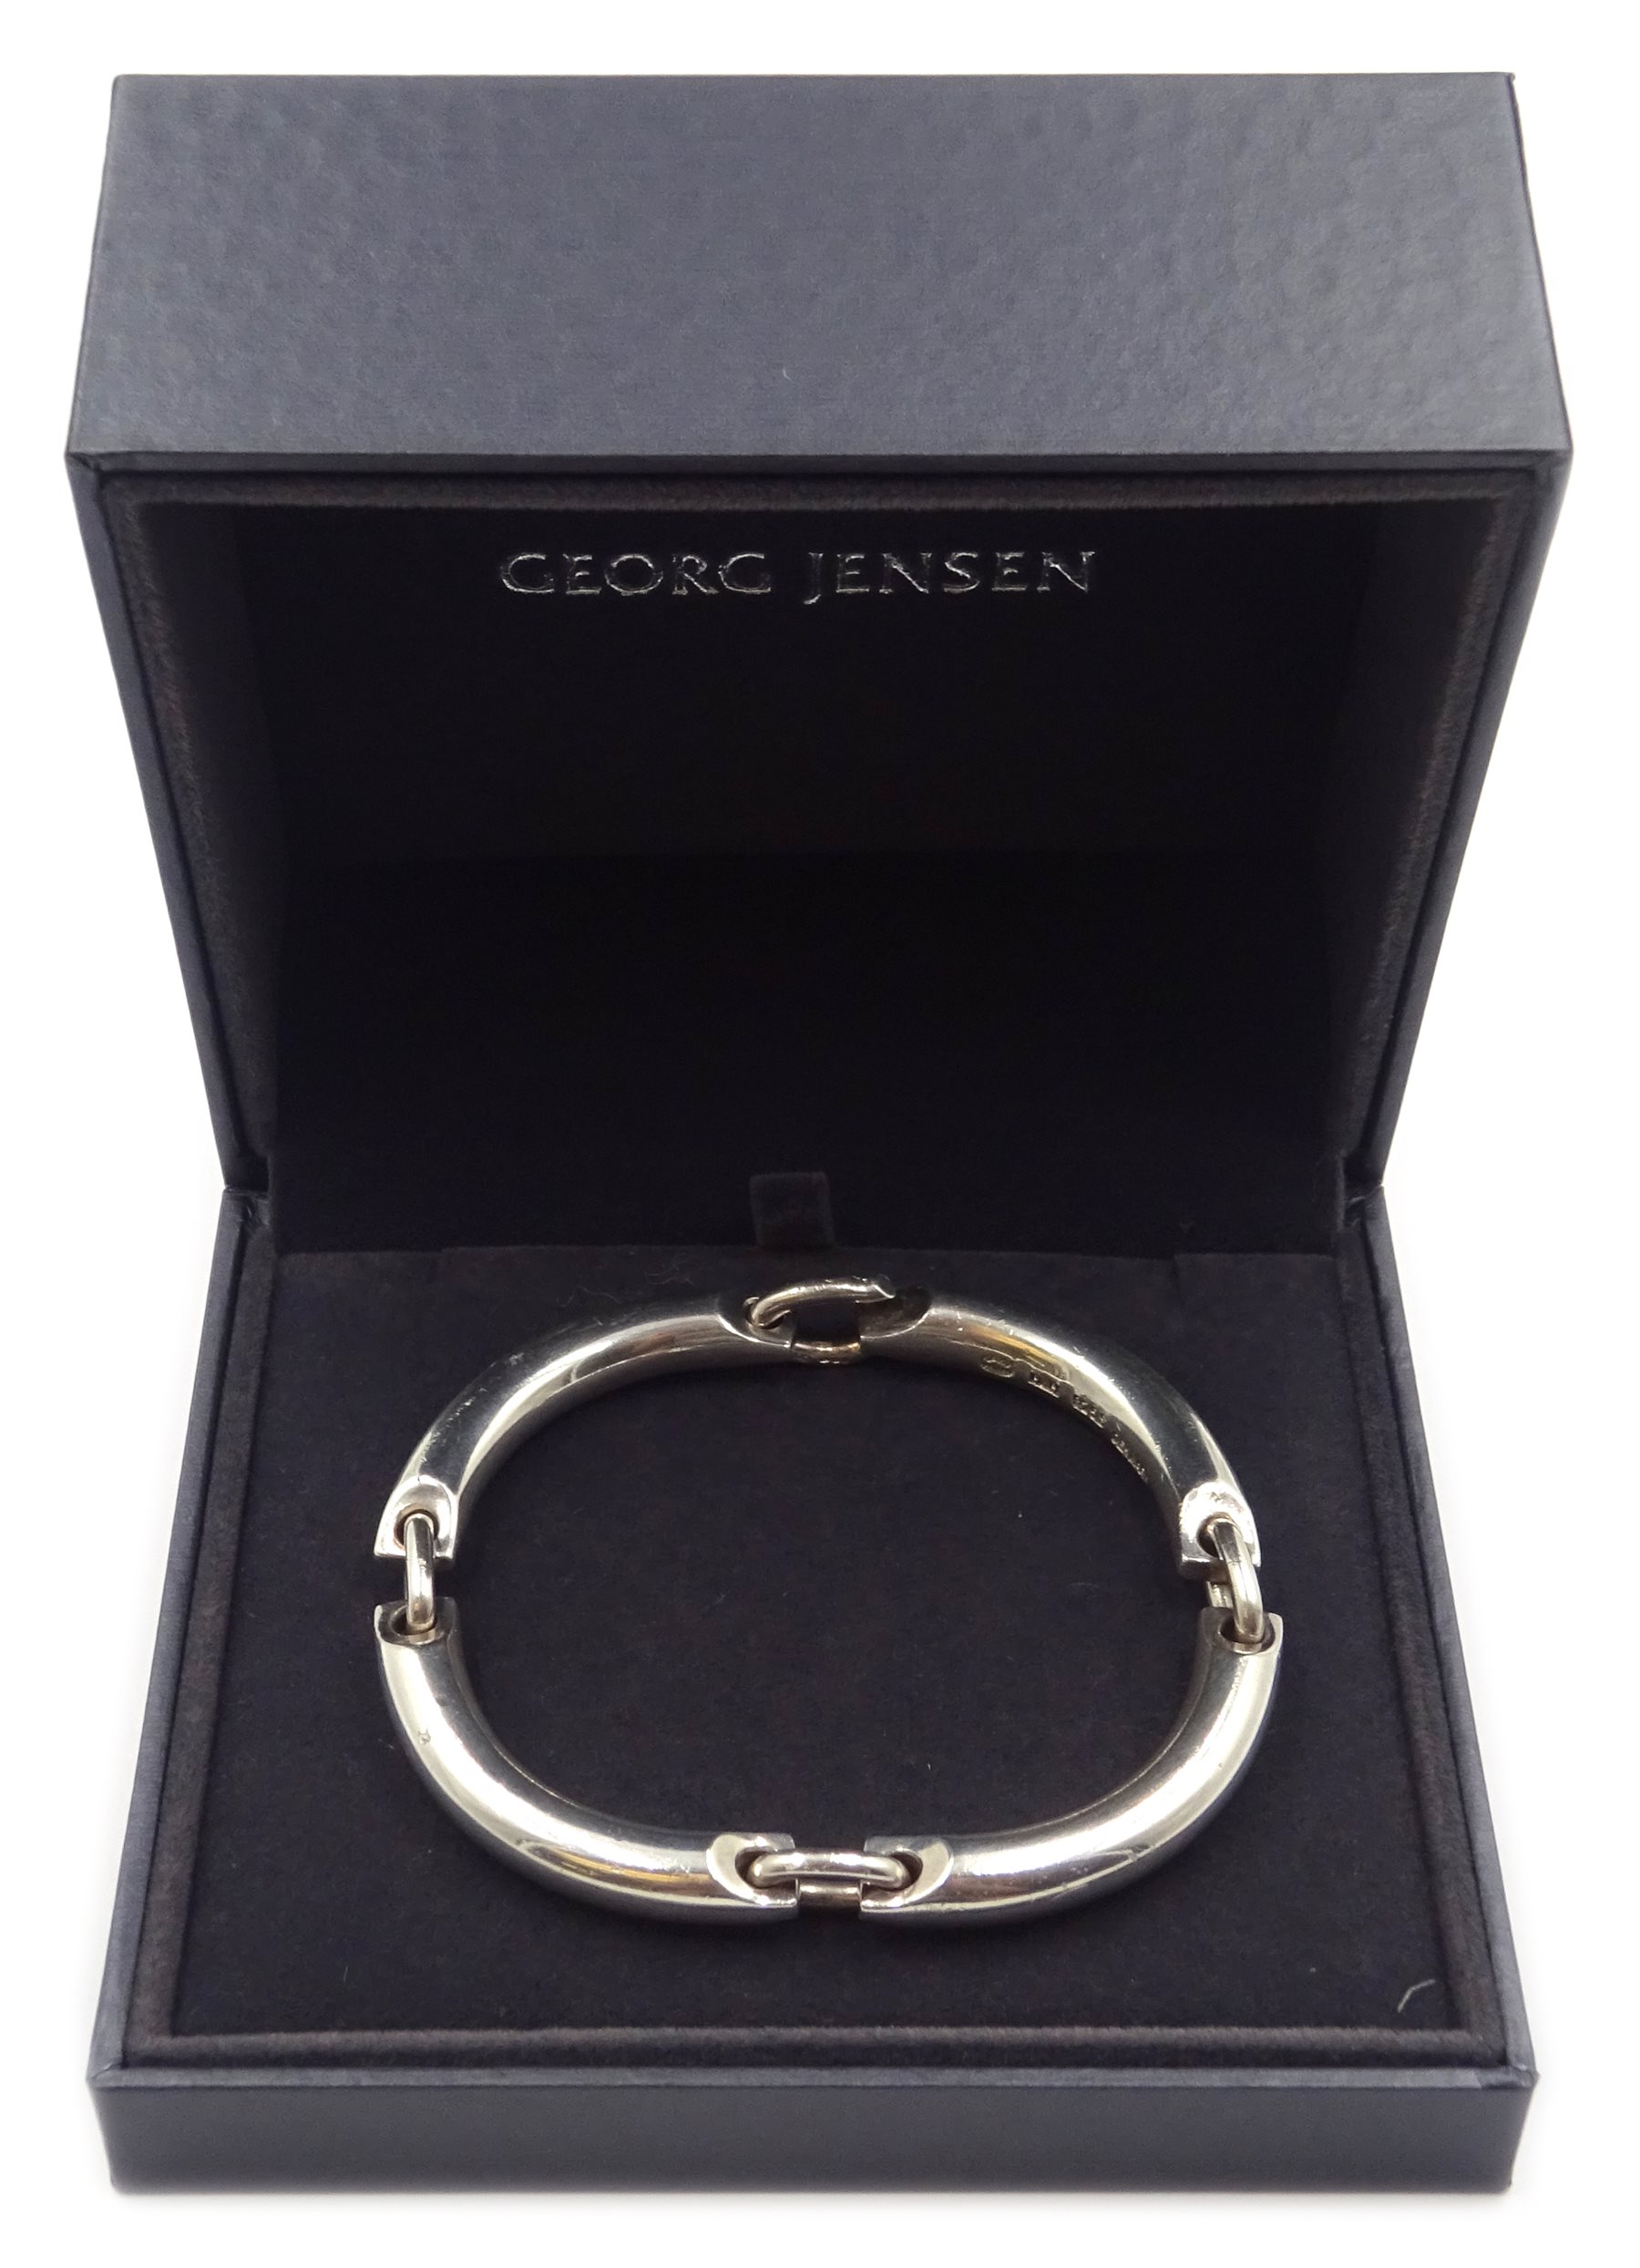 Georg Jensen heavy silver link bracelet, designed by Hans Hansen, London Import mark 1996, boxed - Image 3 of 3